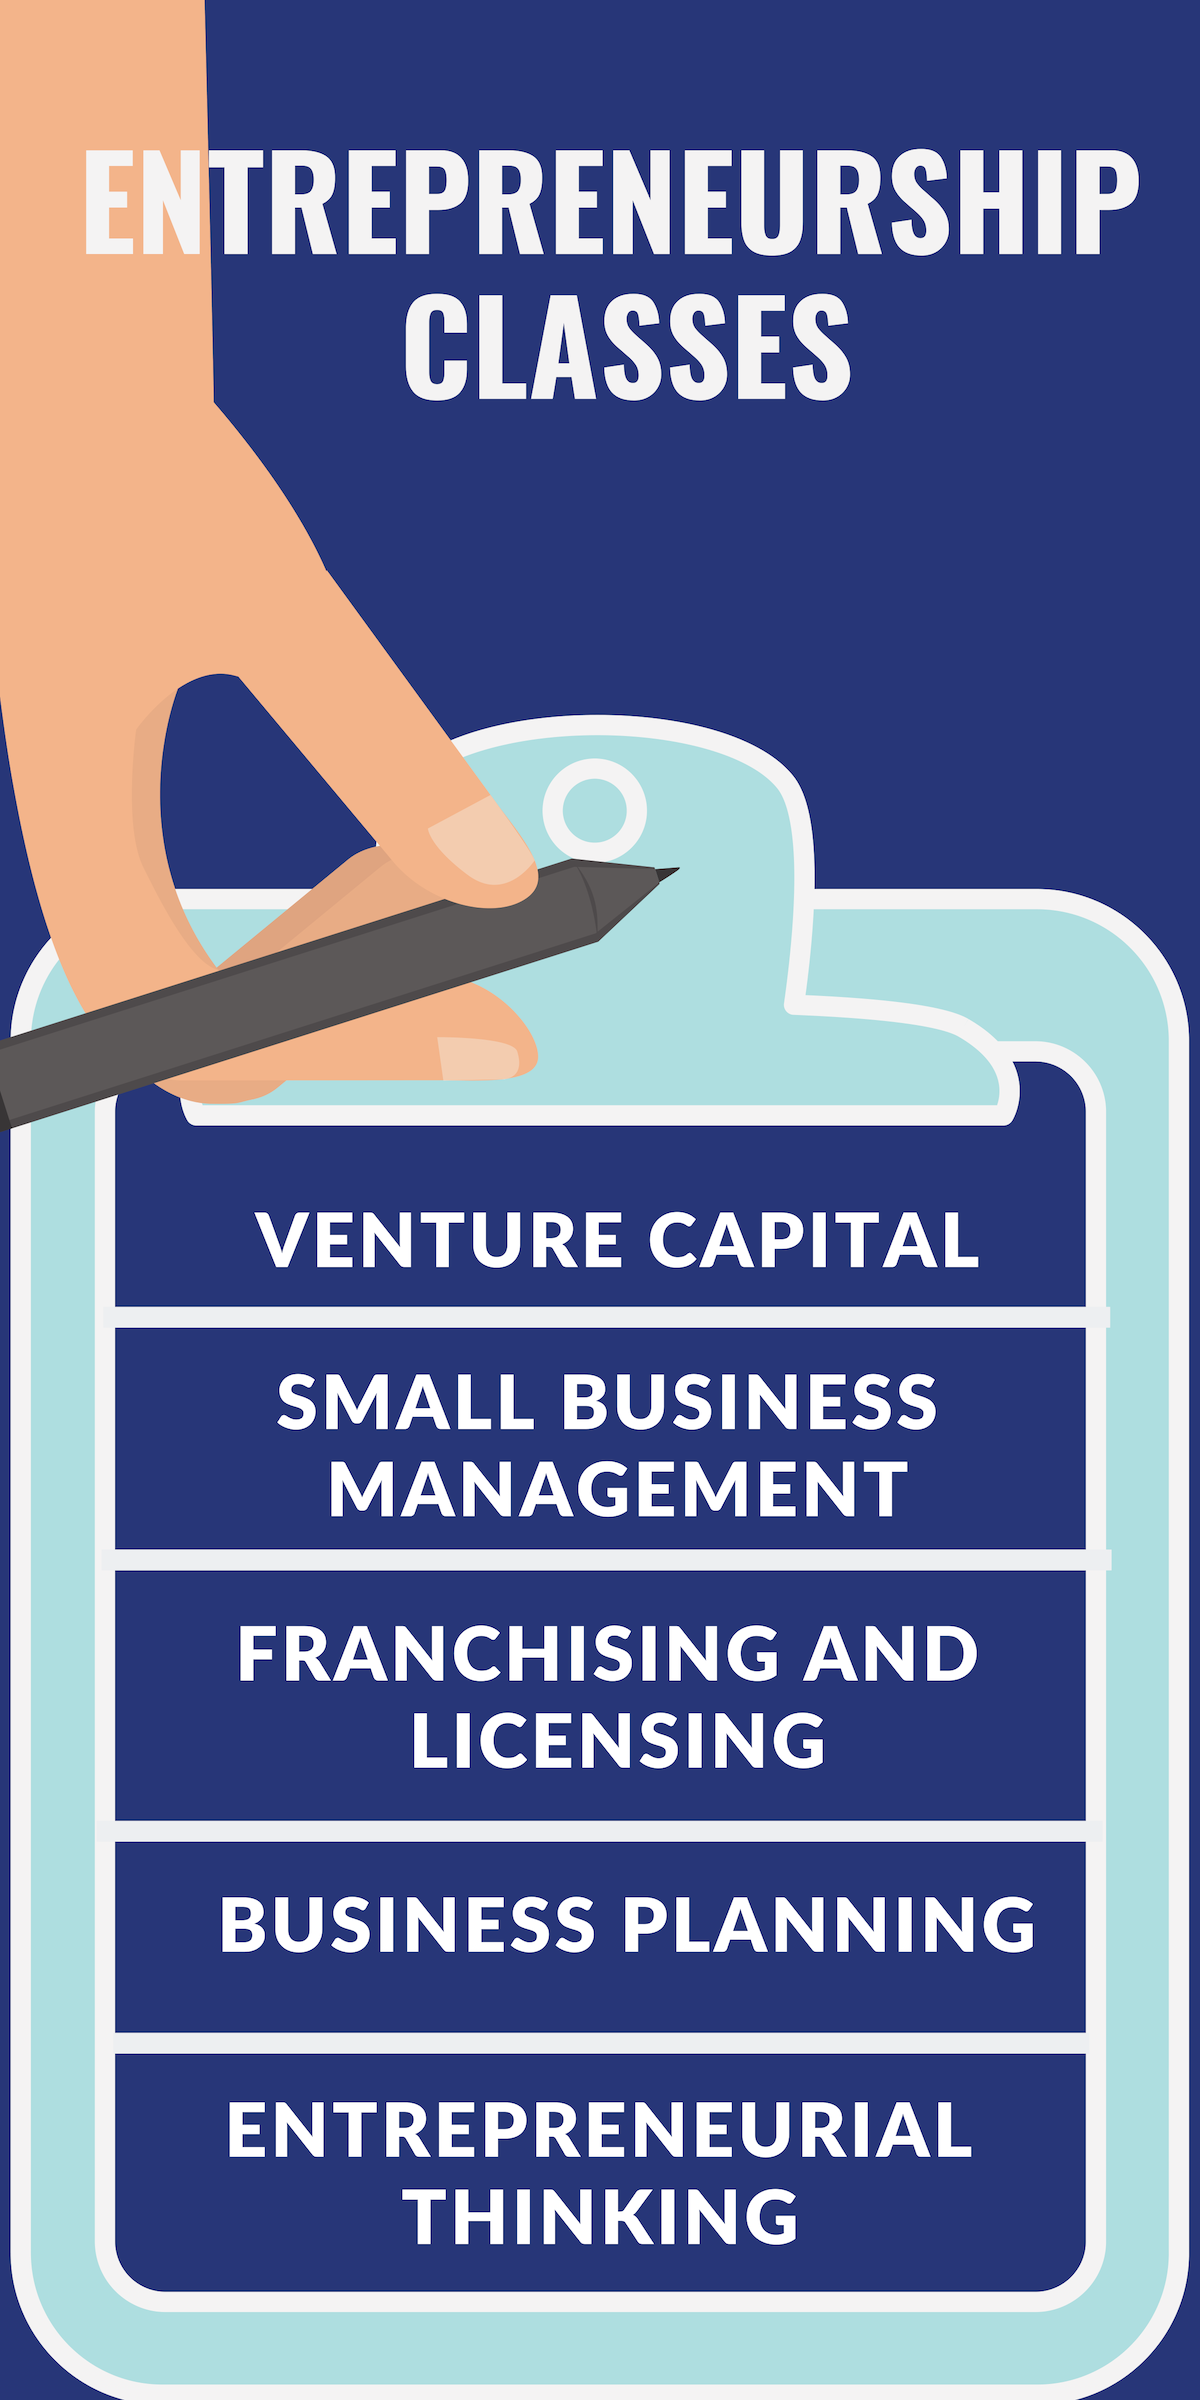 Entrepreneurship Classes: Venture capital, Small Business Management, Franchising and Licensing, Business Planning, Entrepreneurship Thinking